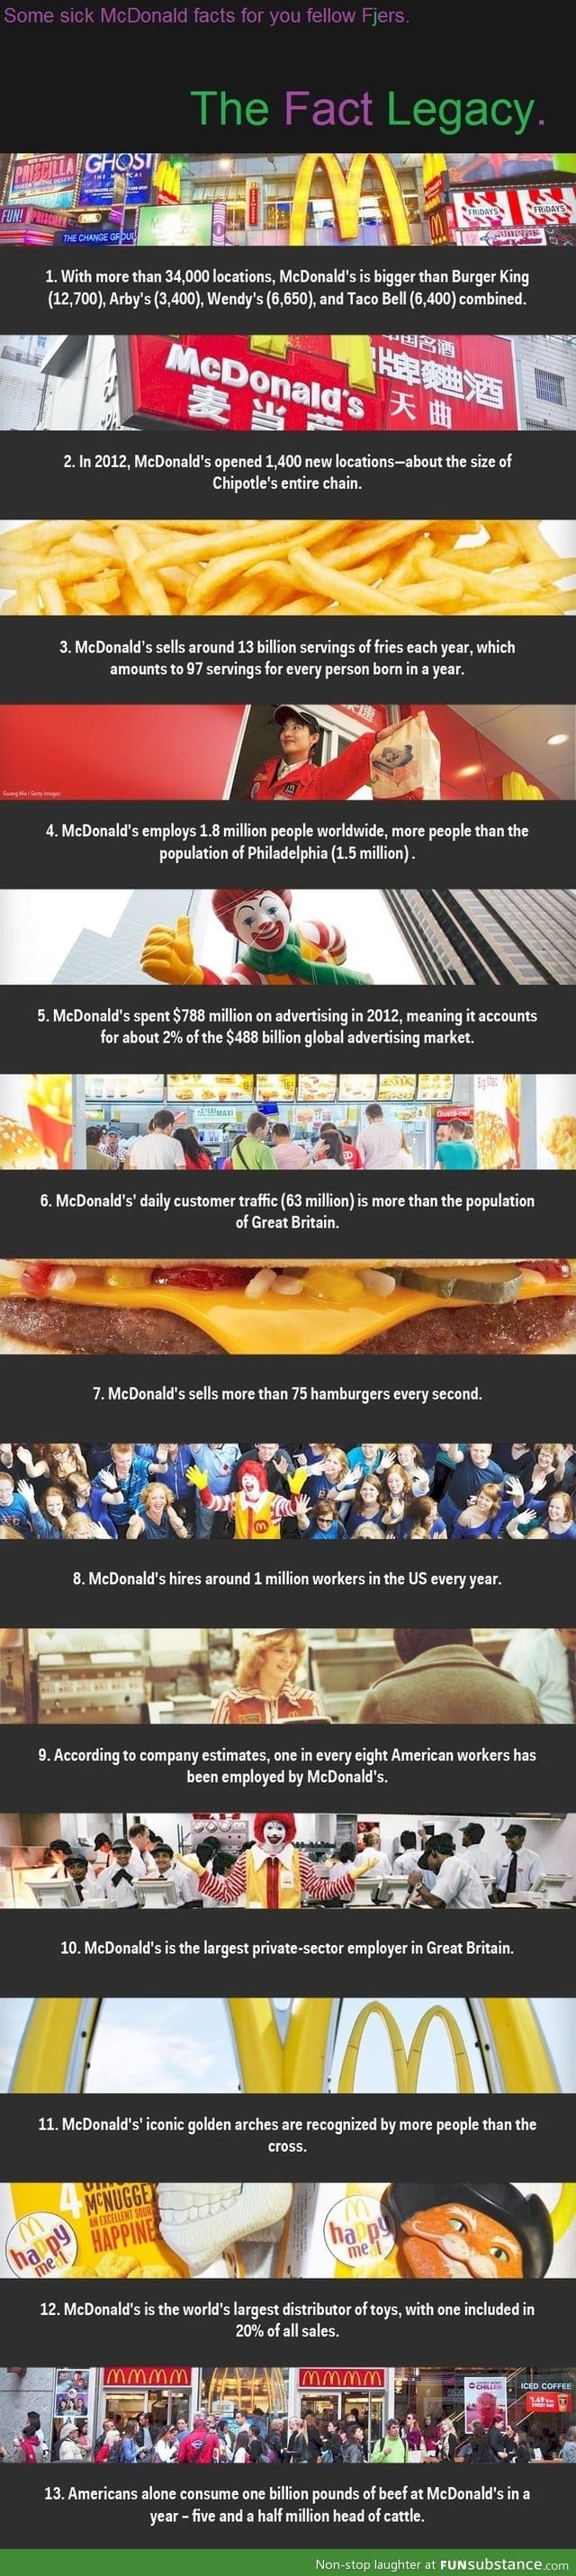 Mcdonald facts